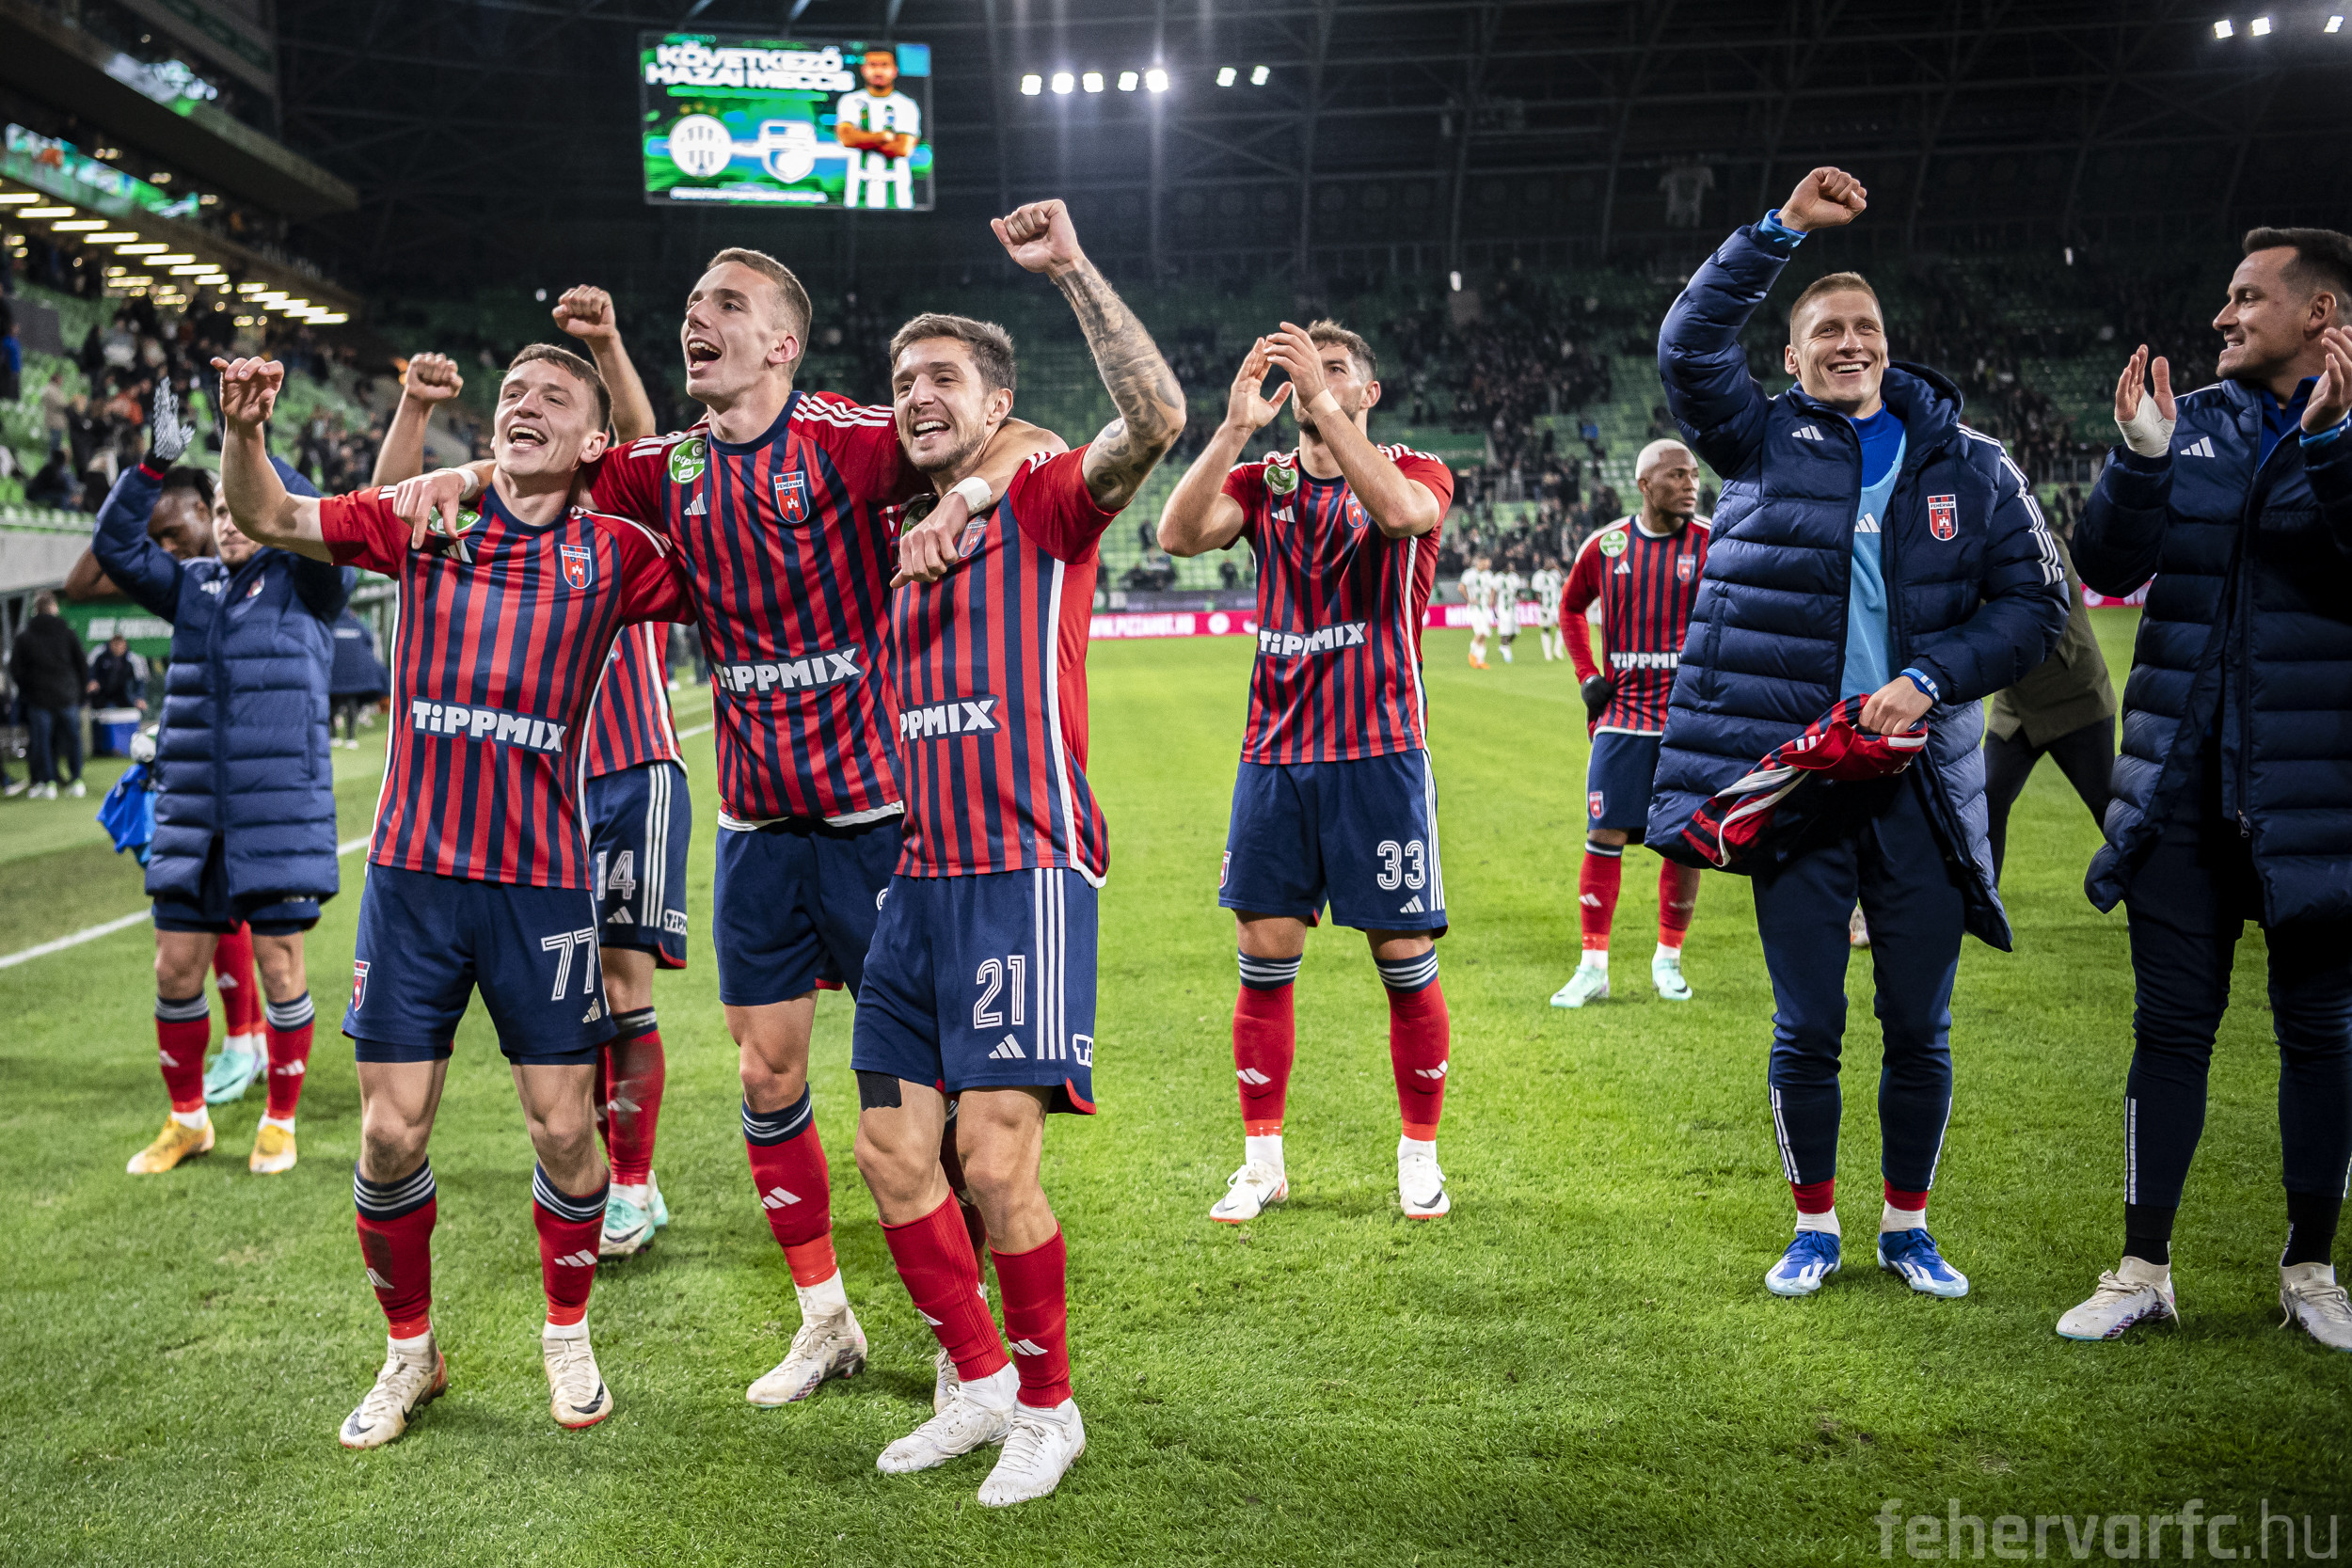 Krisztian Lisztes of Ferencvarosi TC celebrates with teammates after